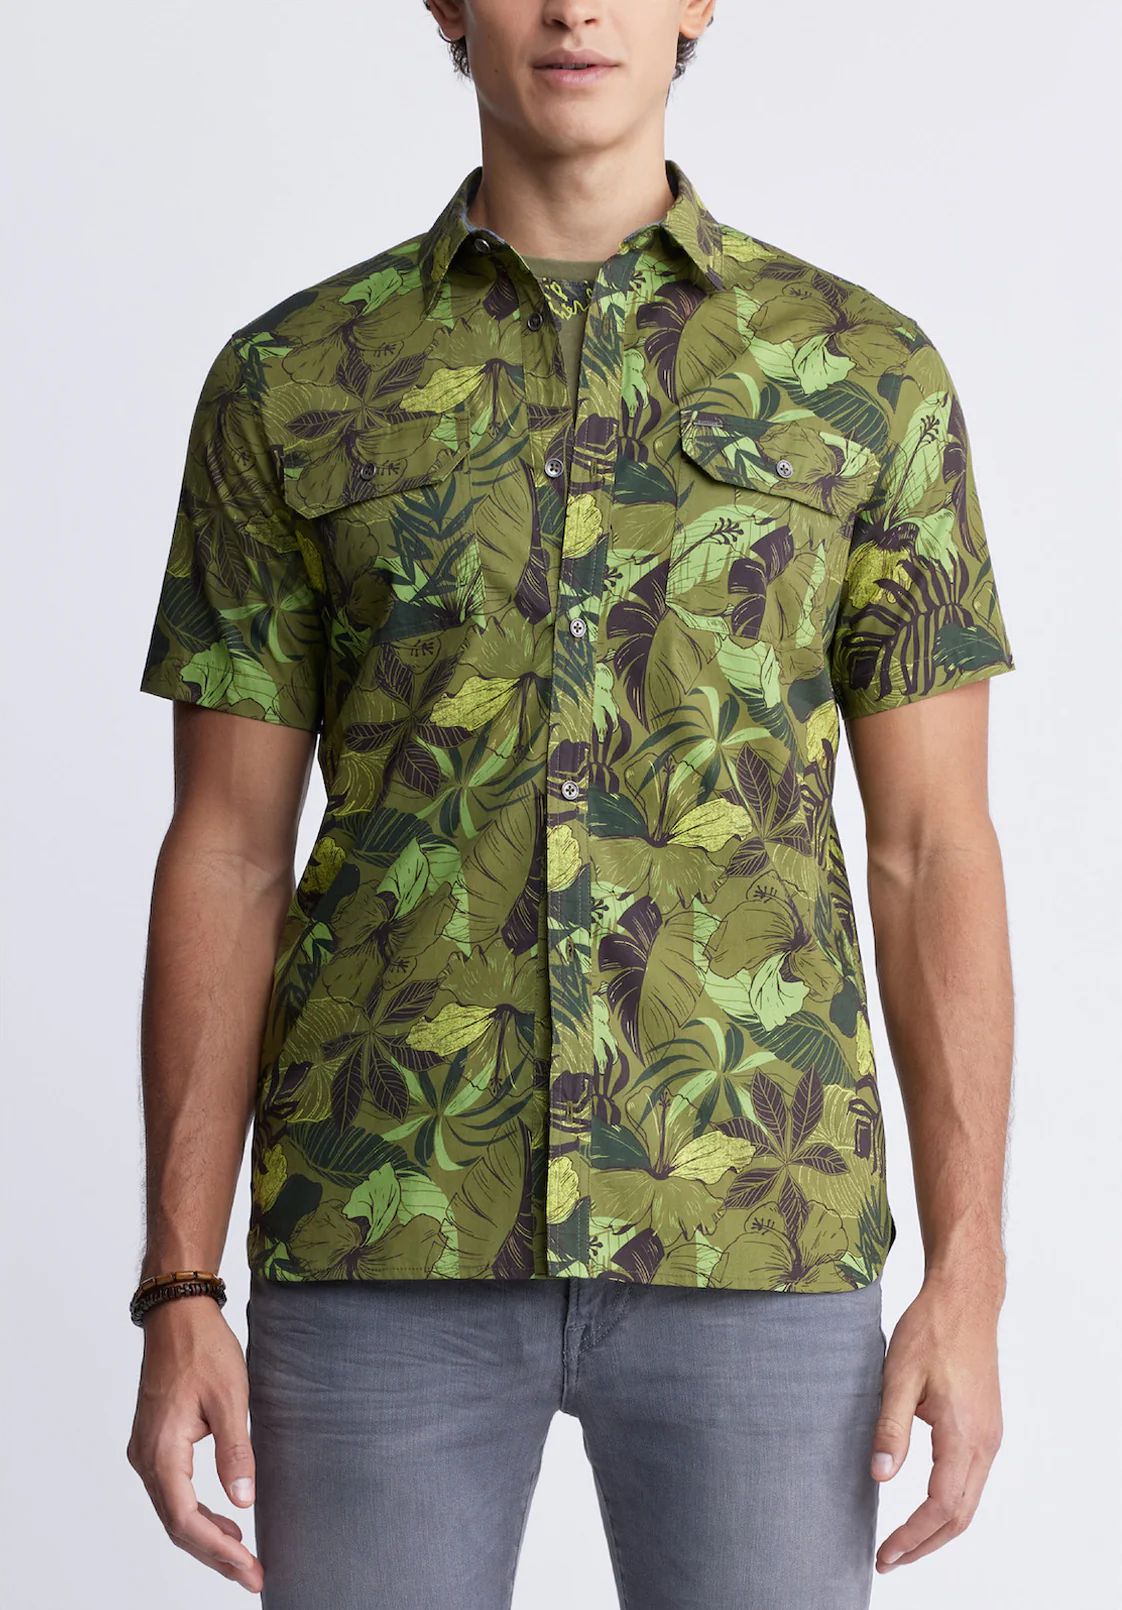 Sayool Men’s Short-Sleeve Printed Shirt in Sphagnum Green - BM24282 | Buffalo David Bitton